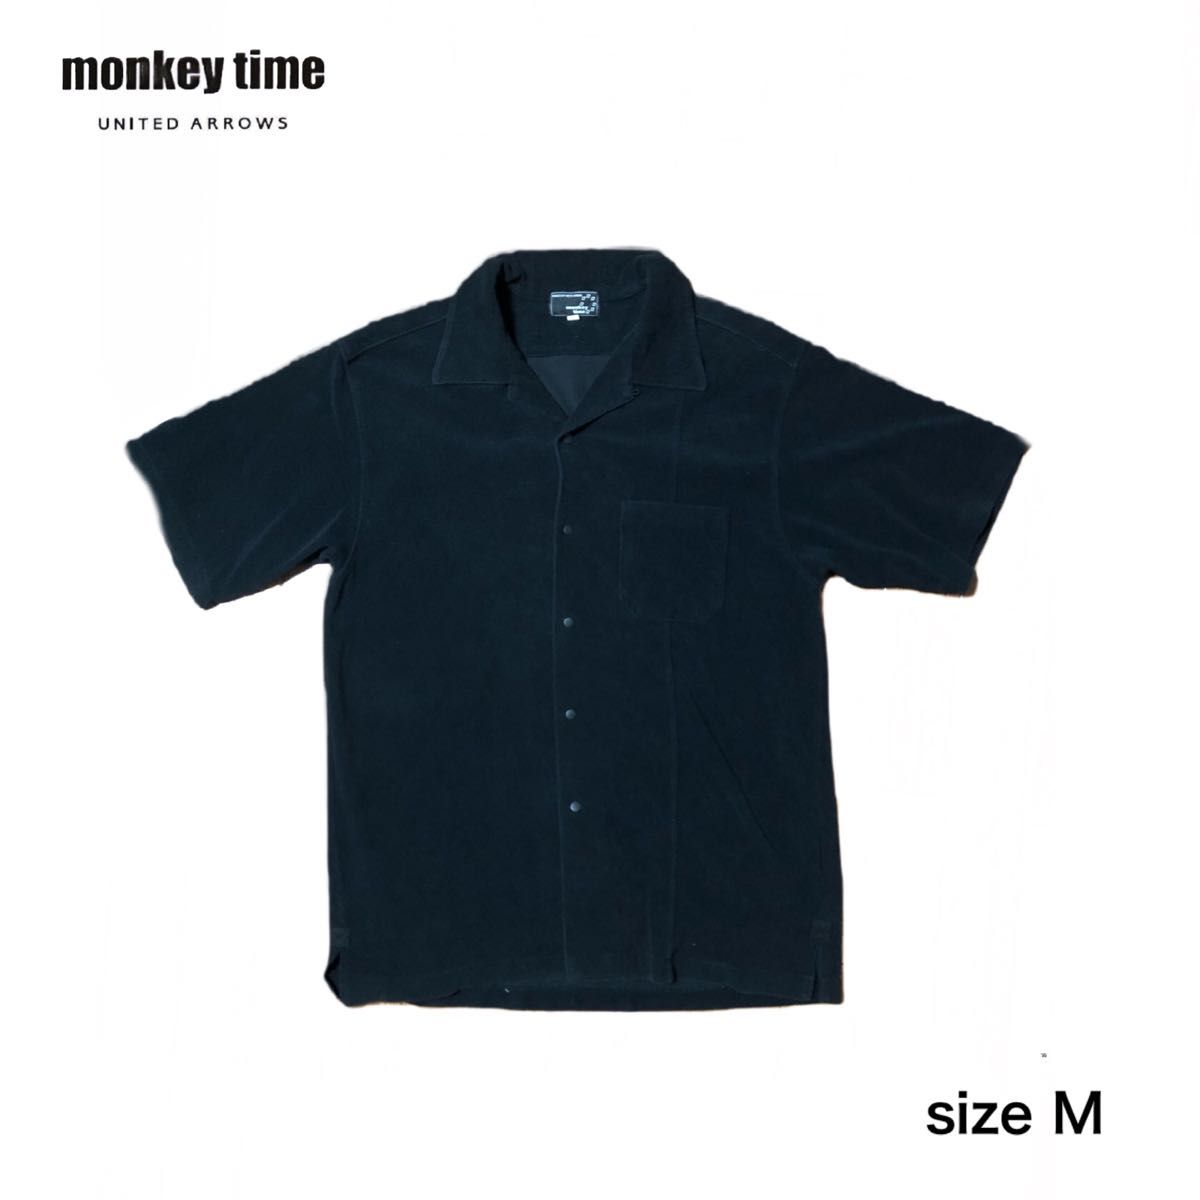 monkey time モンキータイム パイル地 オープンカラーシャツ 開襟シャツ size M ユナイテッドアローズ 日本製